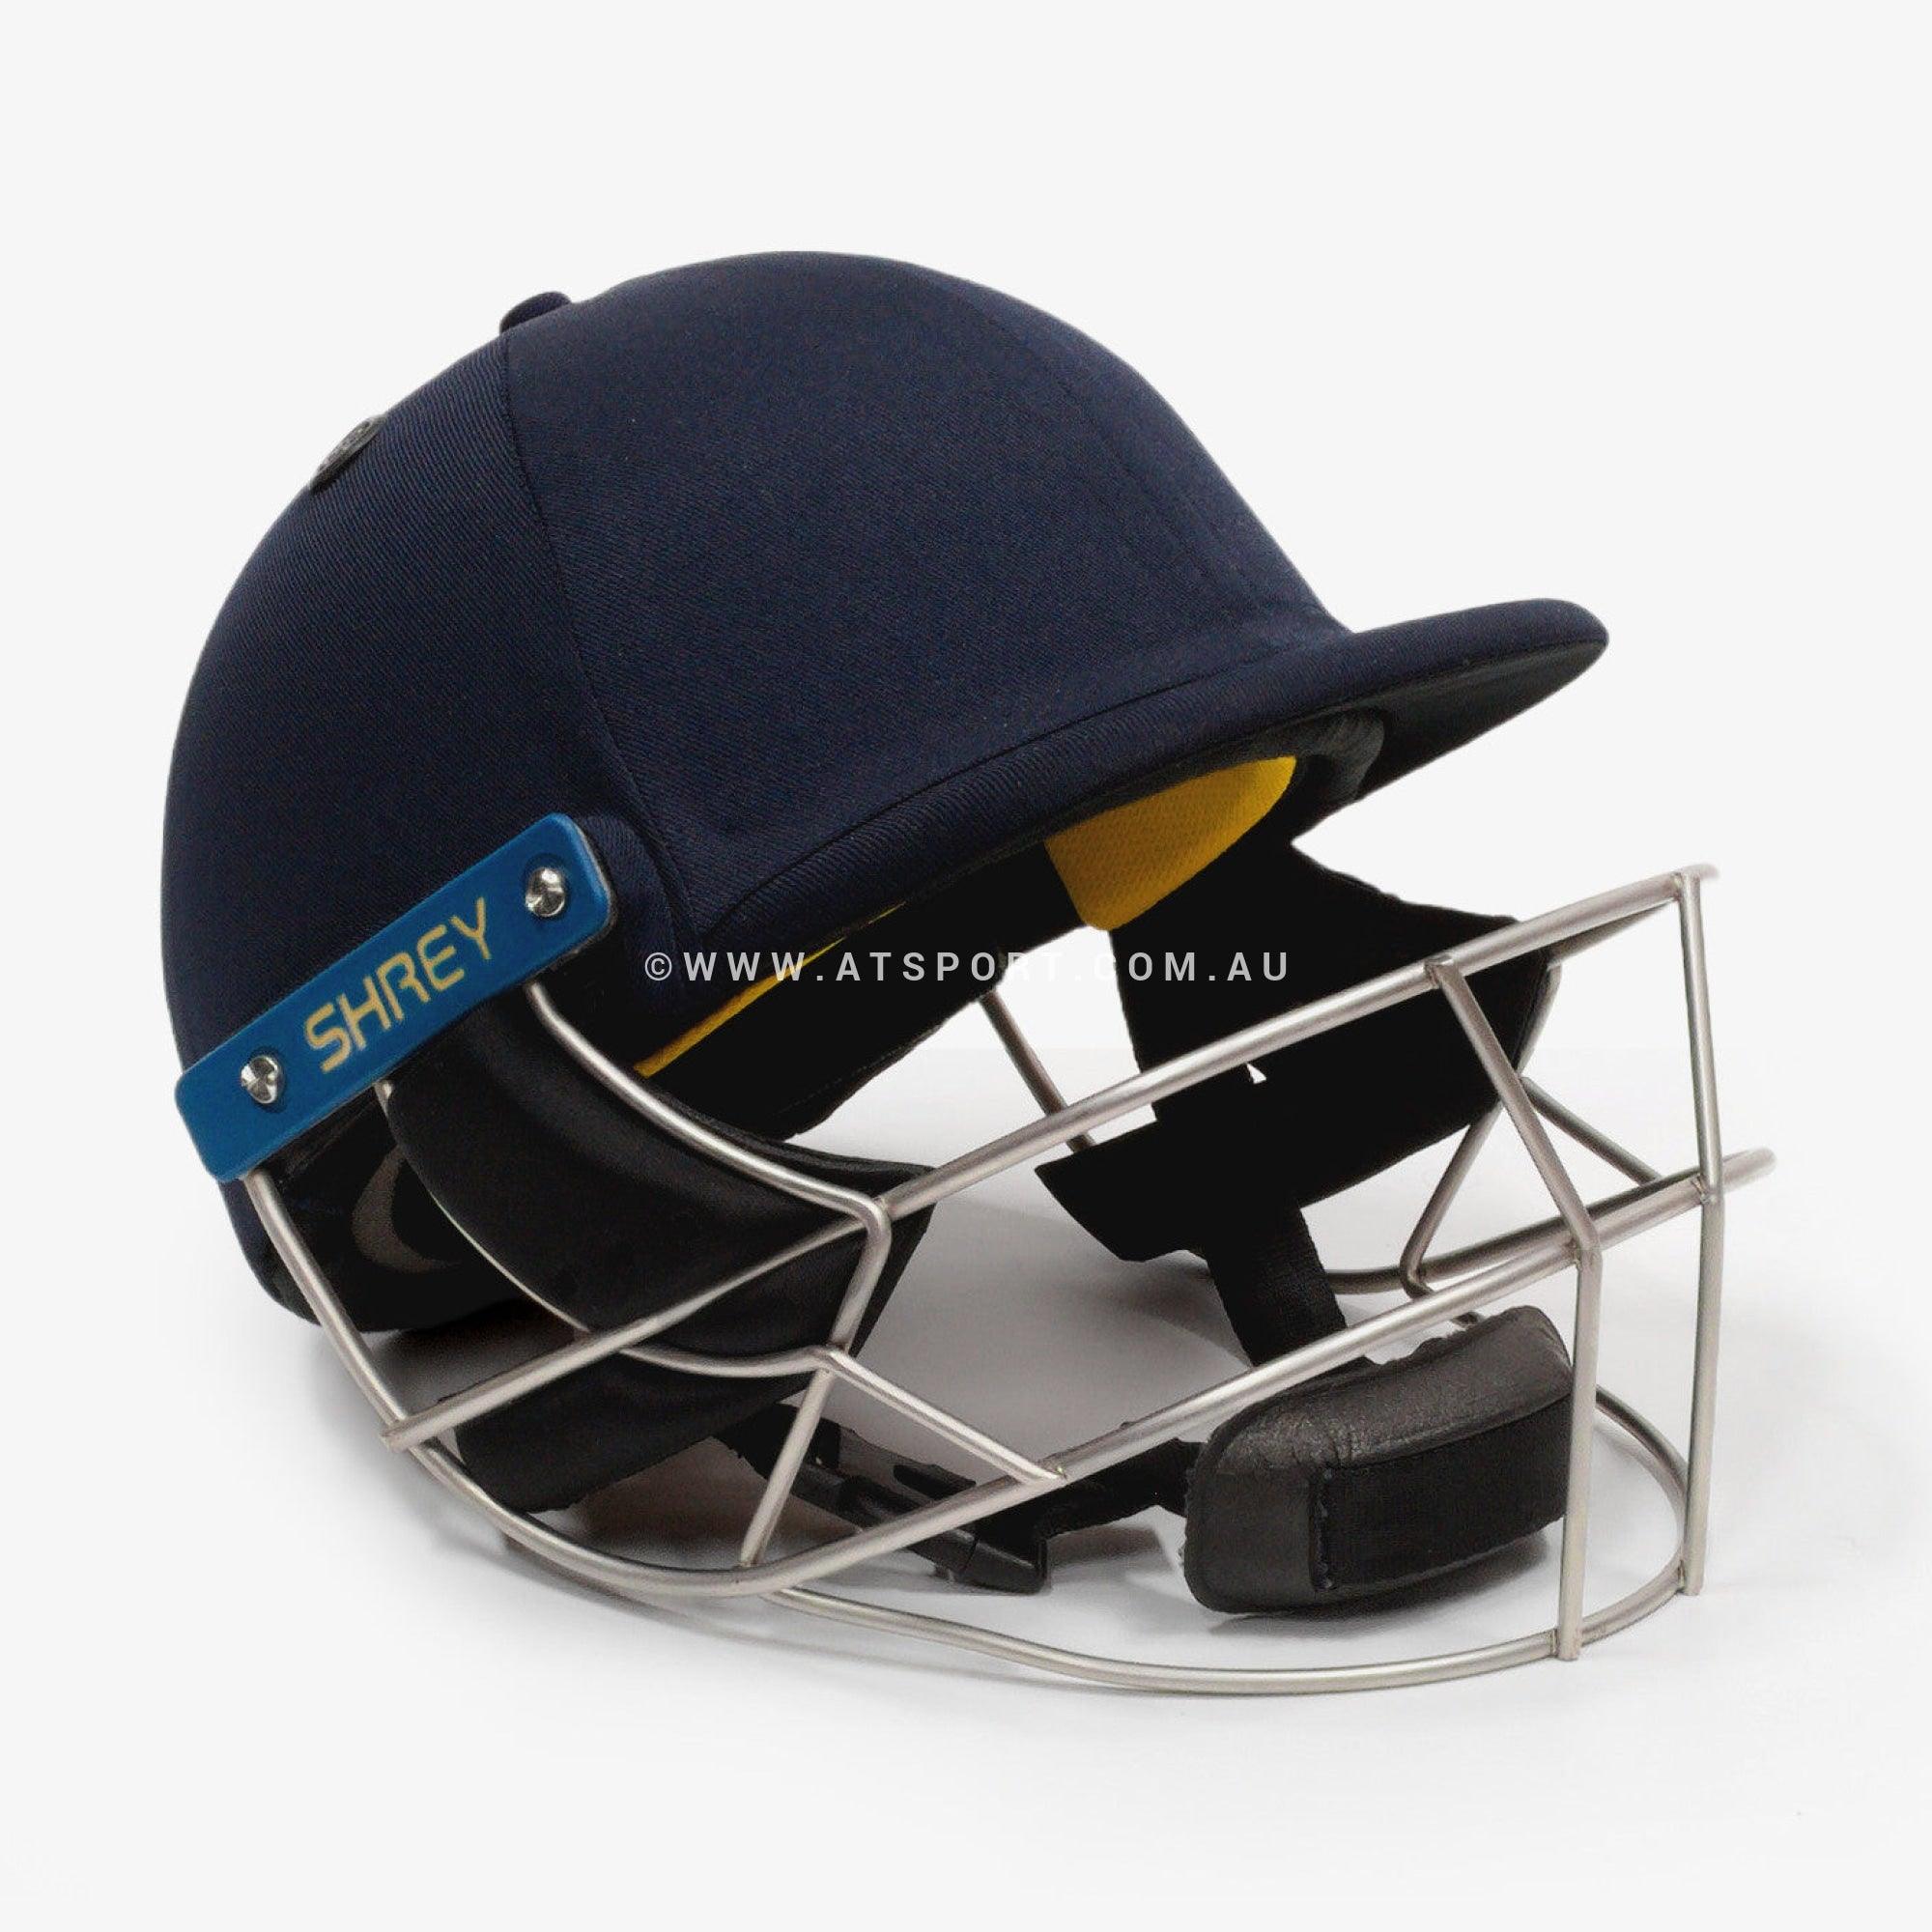 Shrey Masterclass Air 2.0 STEEL Grille Cricket Helmet - AT Sports